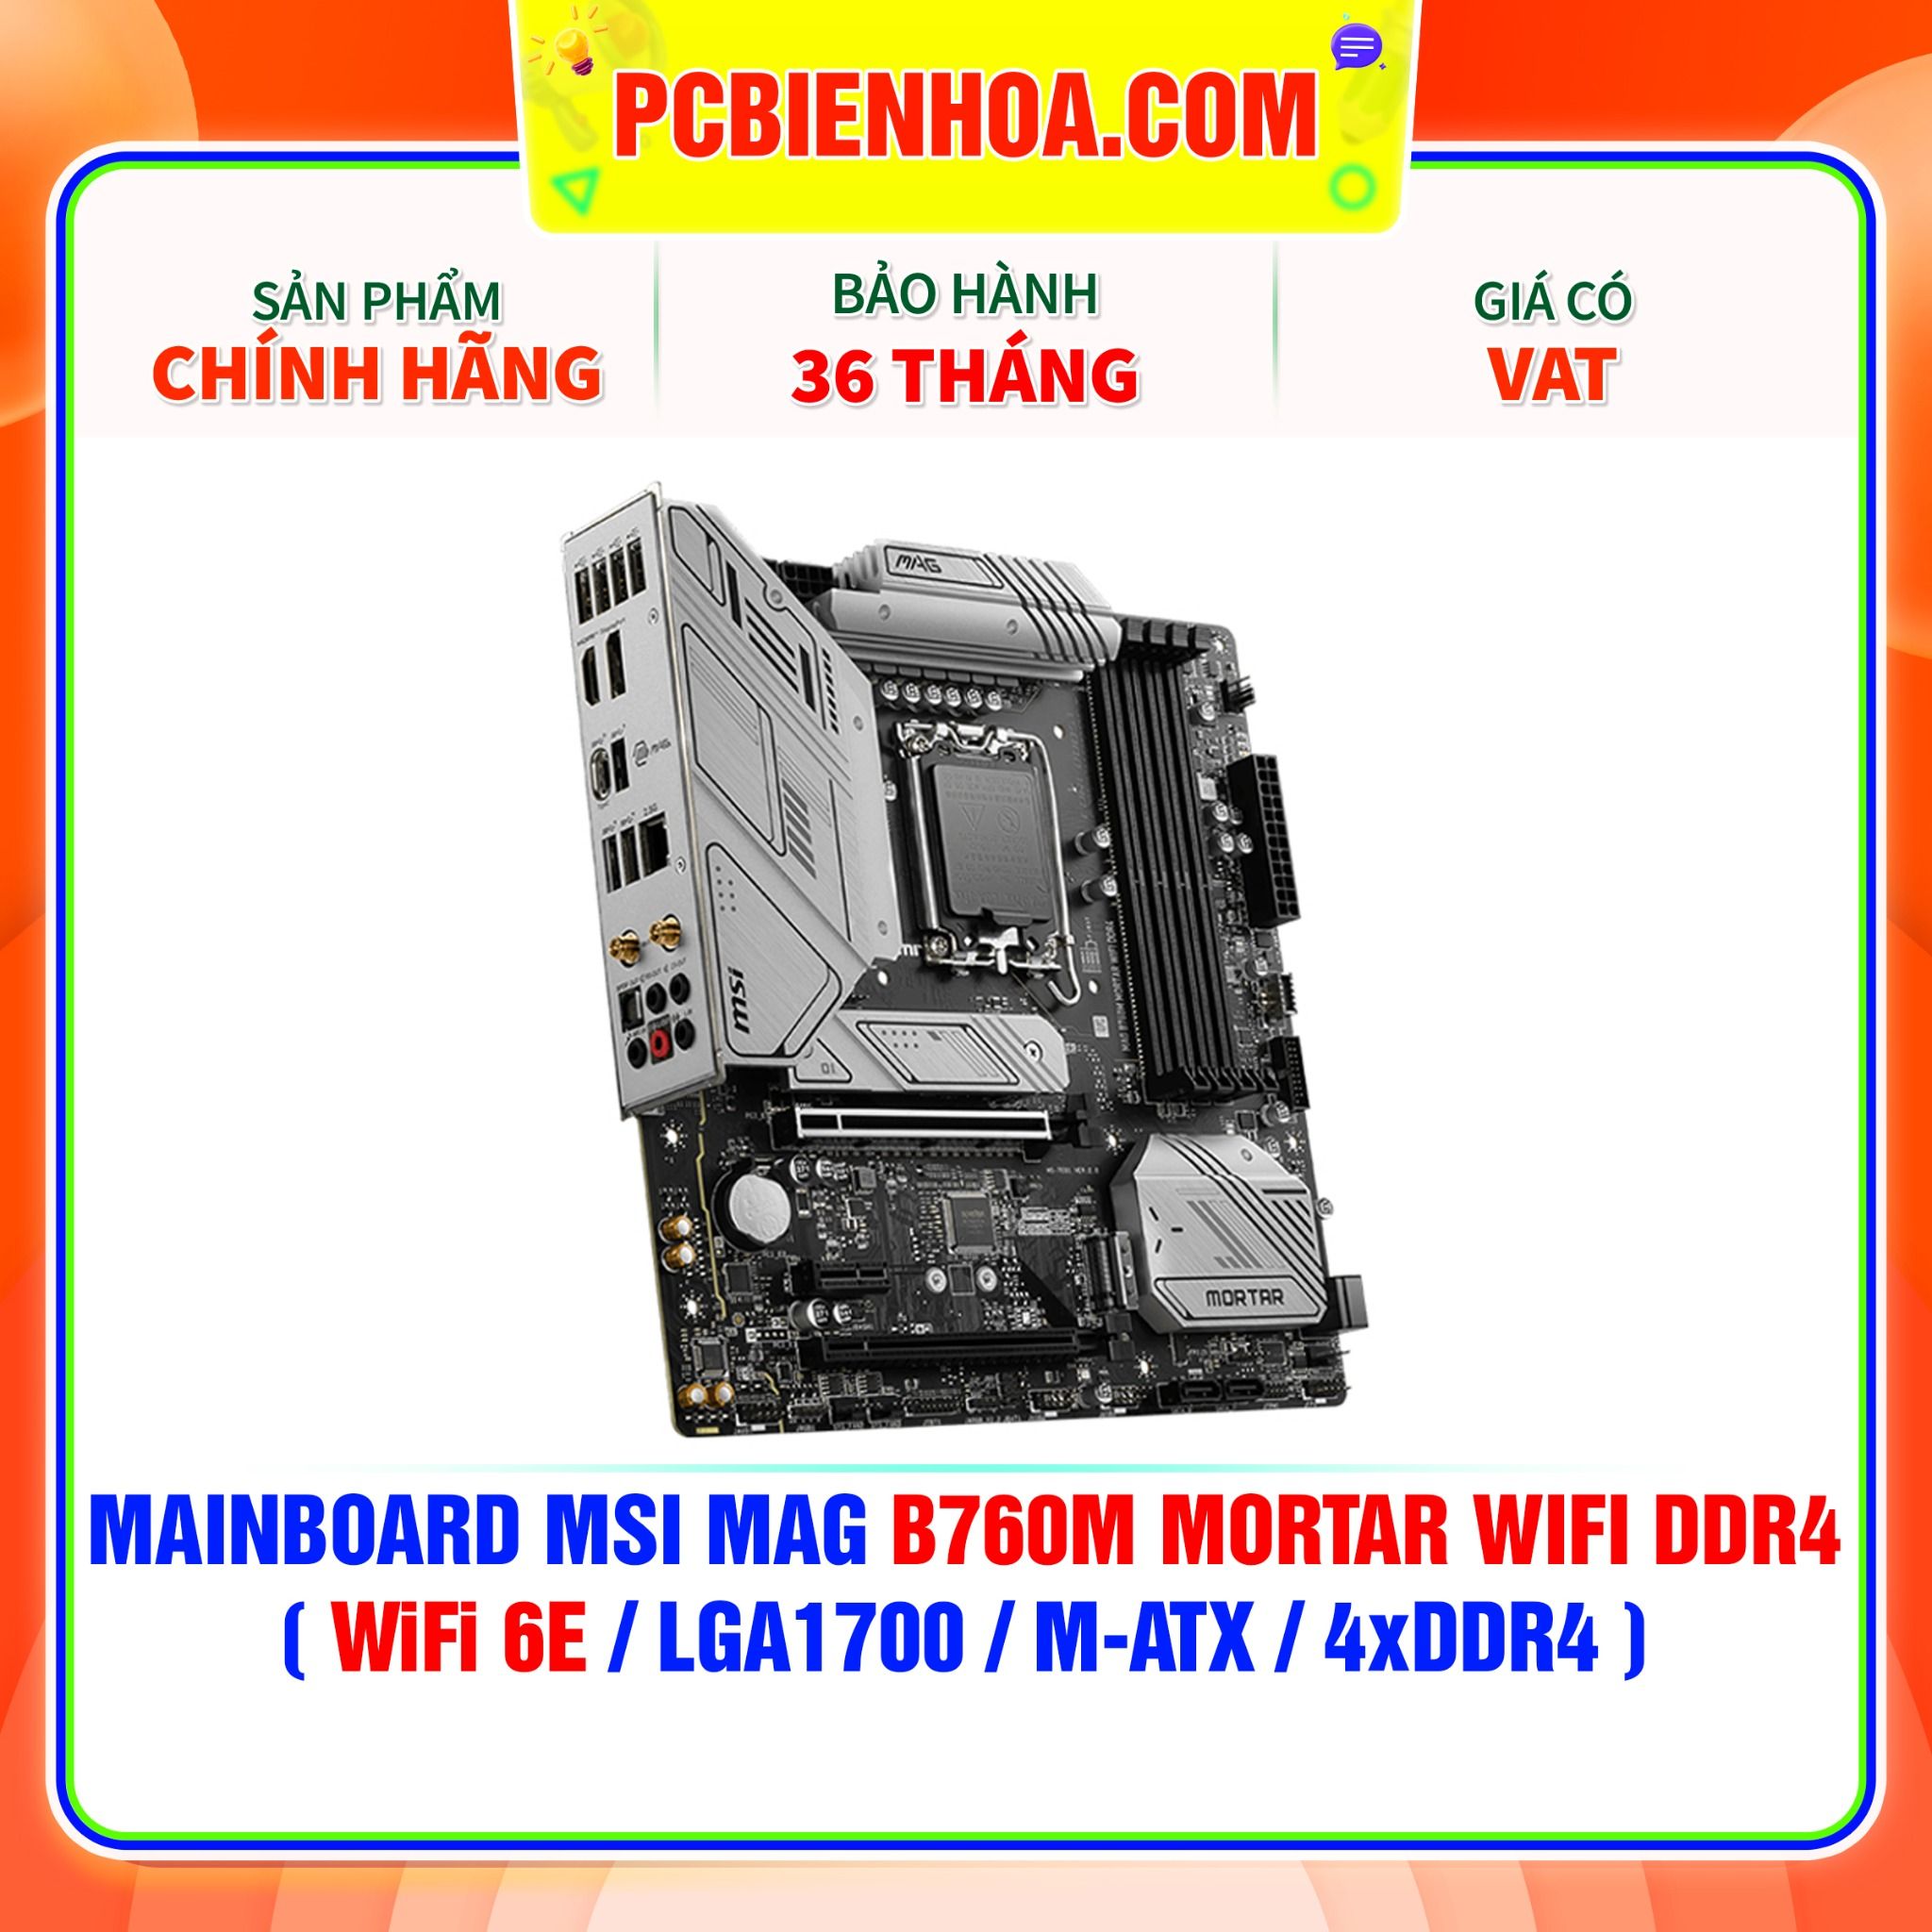  MAINBOARD MSI MAG B760M MORTAR WIFI DDR4 ( WiFi 6E / LGA1700 / M-ATX / 4xDDR4 ) 